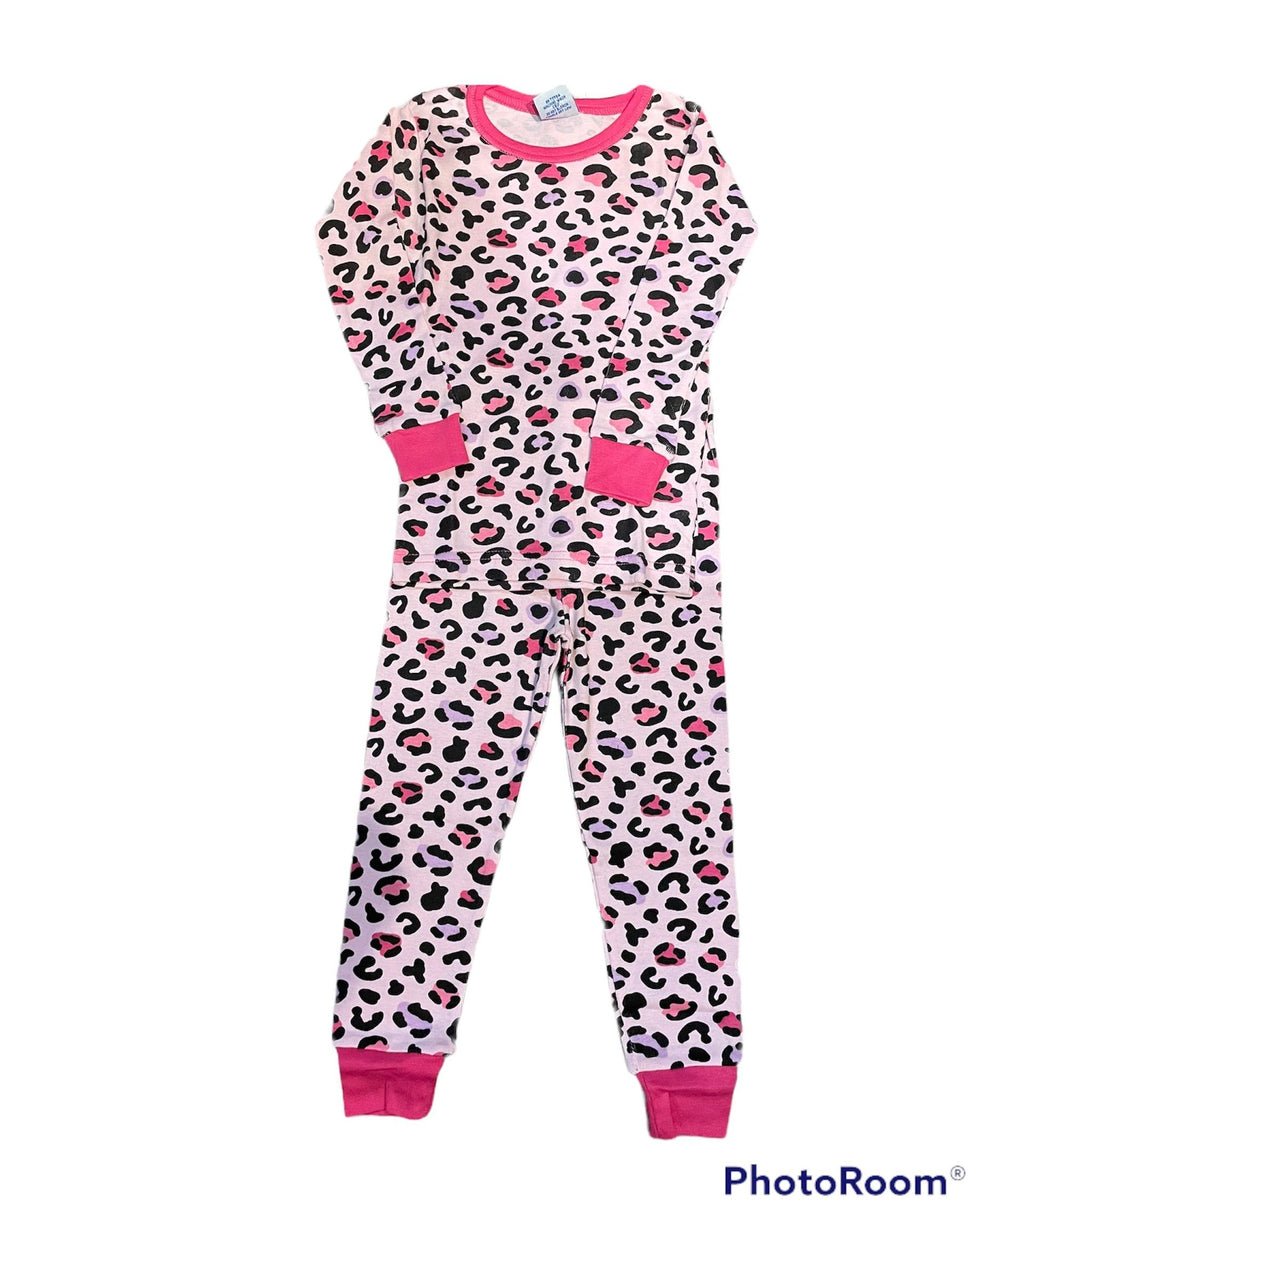 2pc pink cheetah pajamas